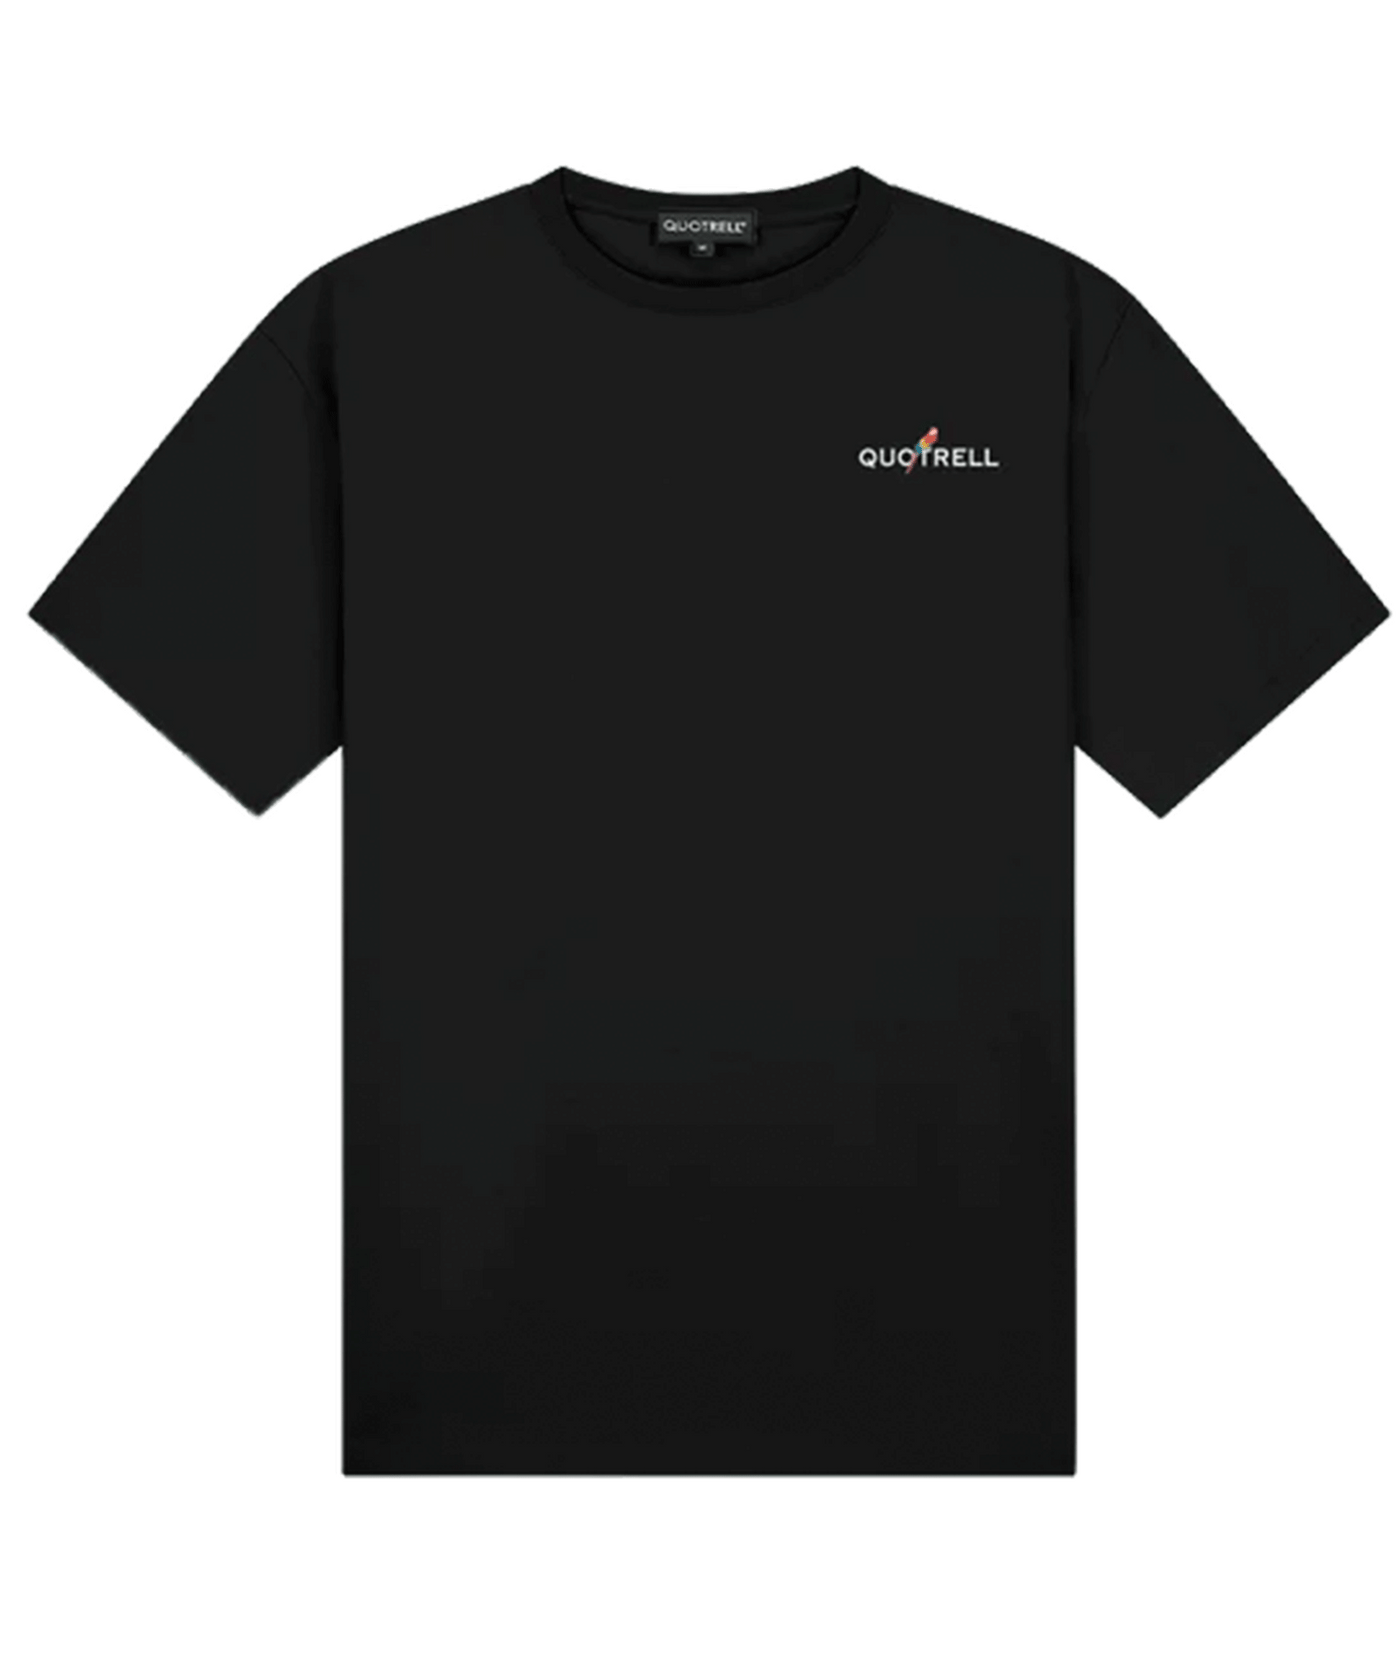 Quotrell - Resort - T-shirt - Black/white